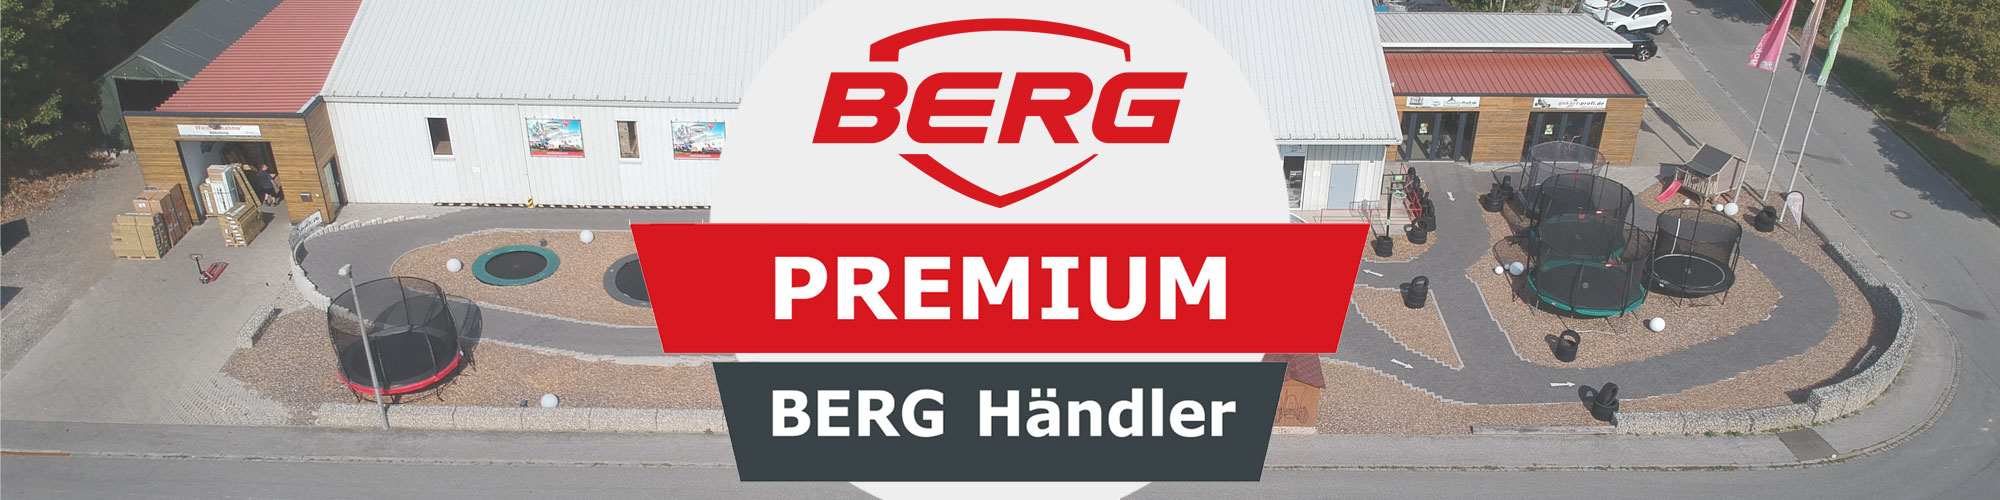 BERG Premium-Händler